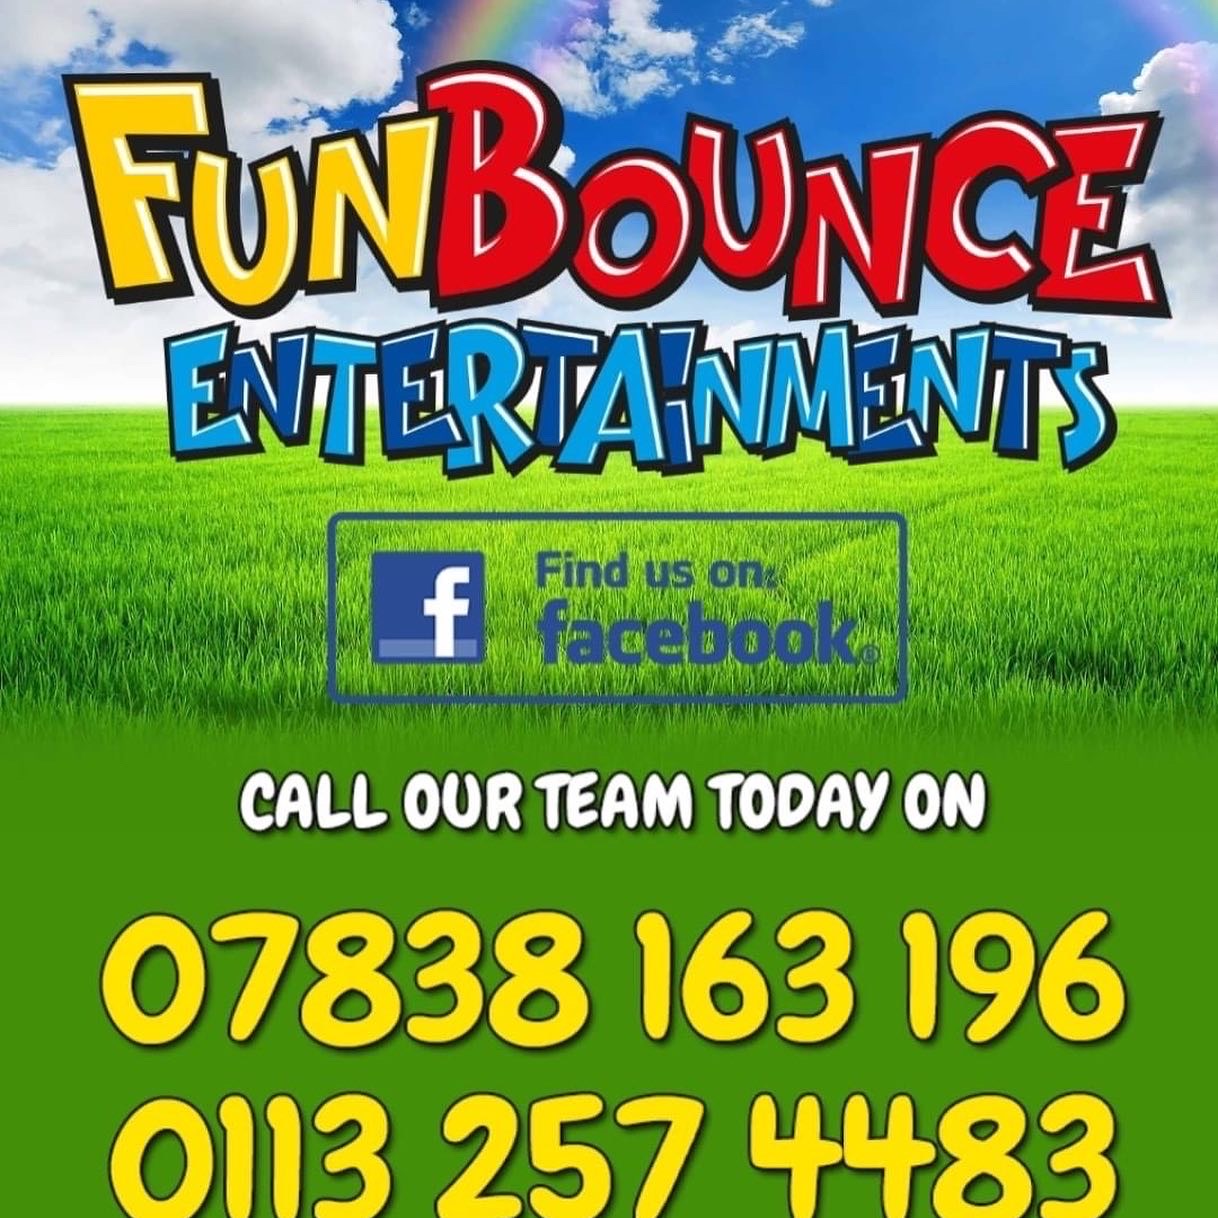 FunBounce Entertainments